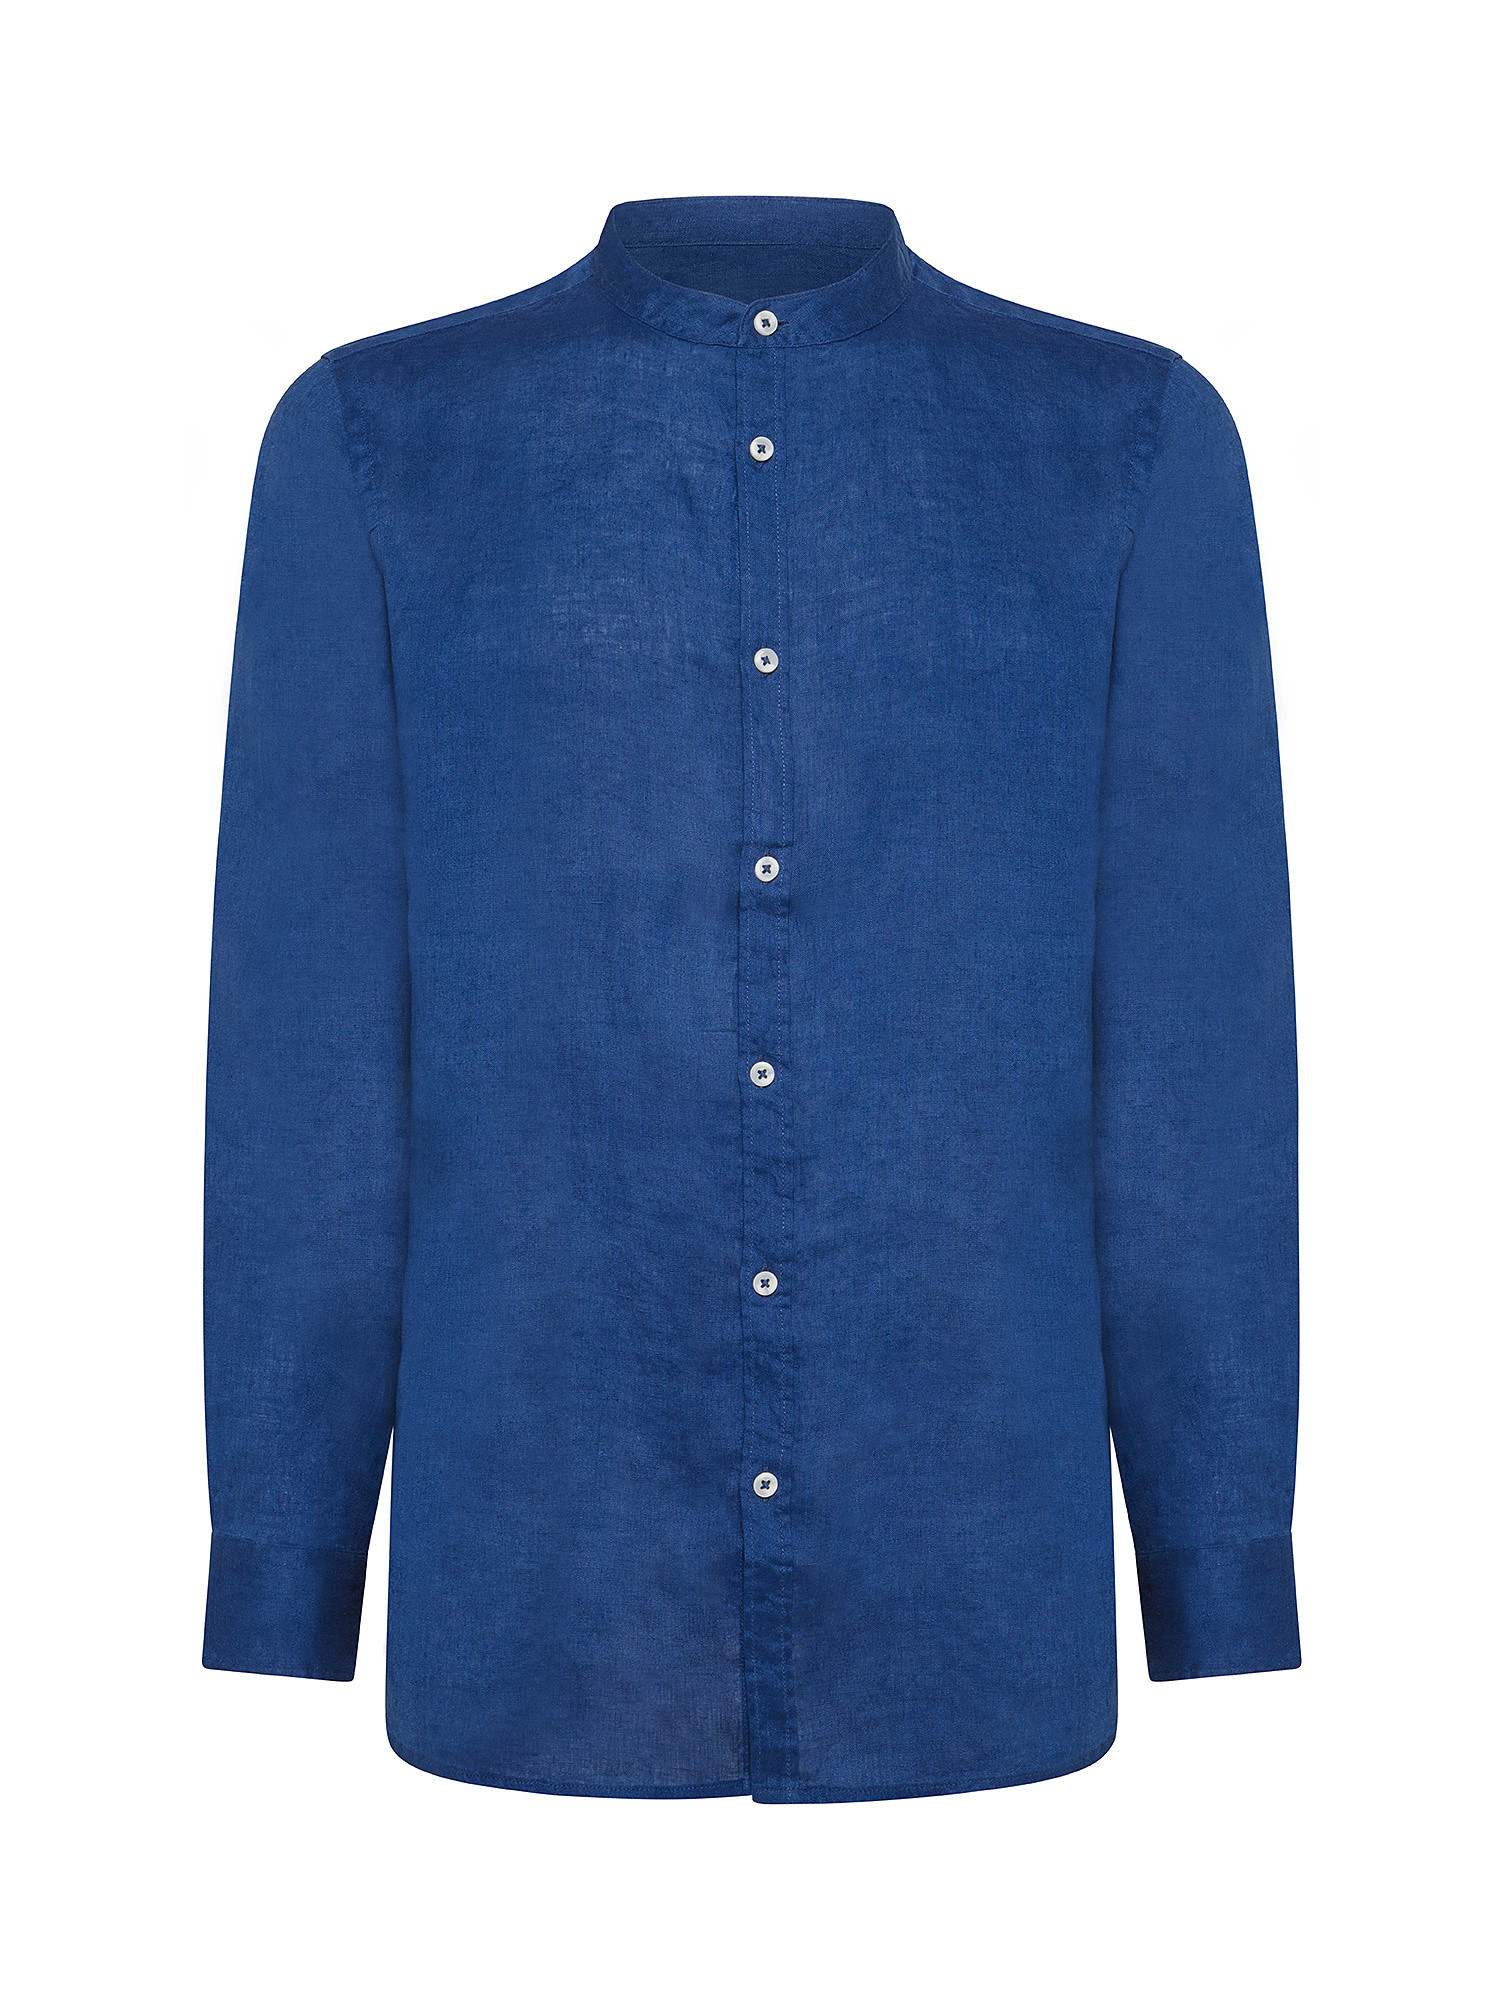 JCT - Pure linen Korean shirt, Royal Blue, large image number 0